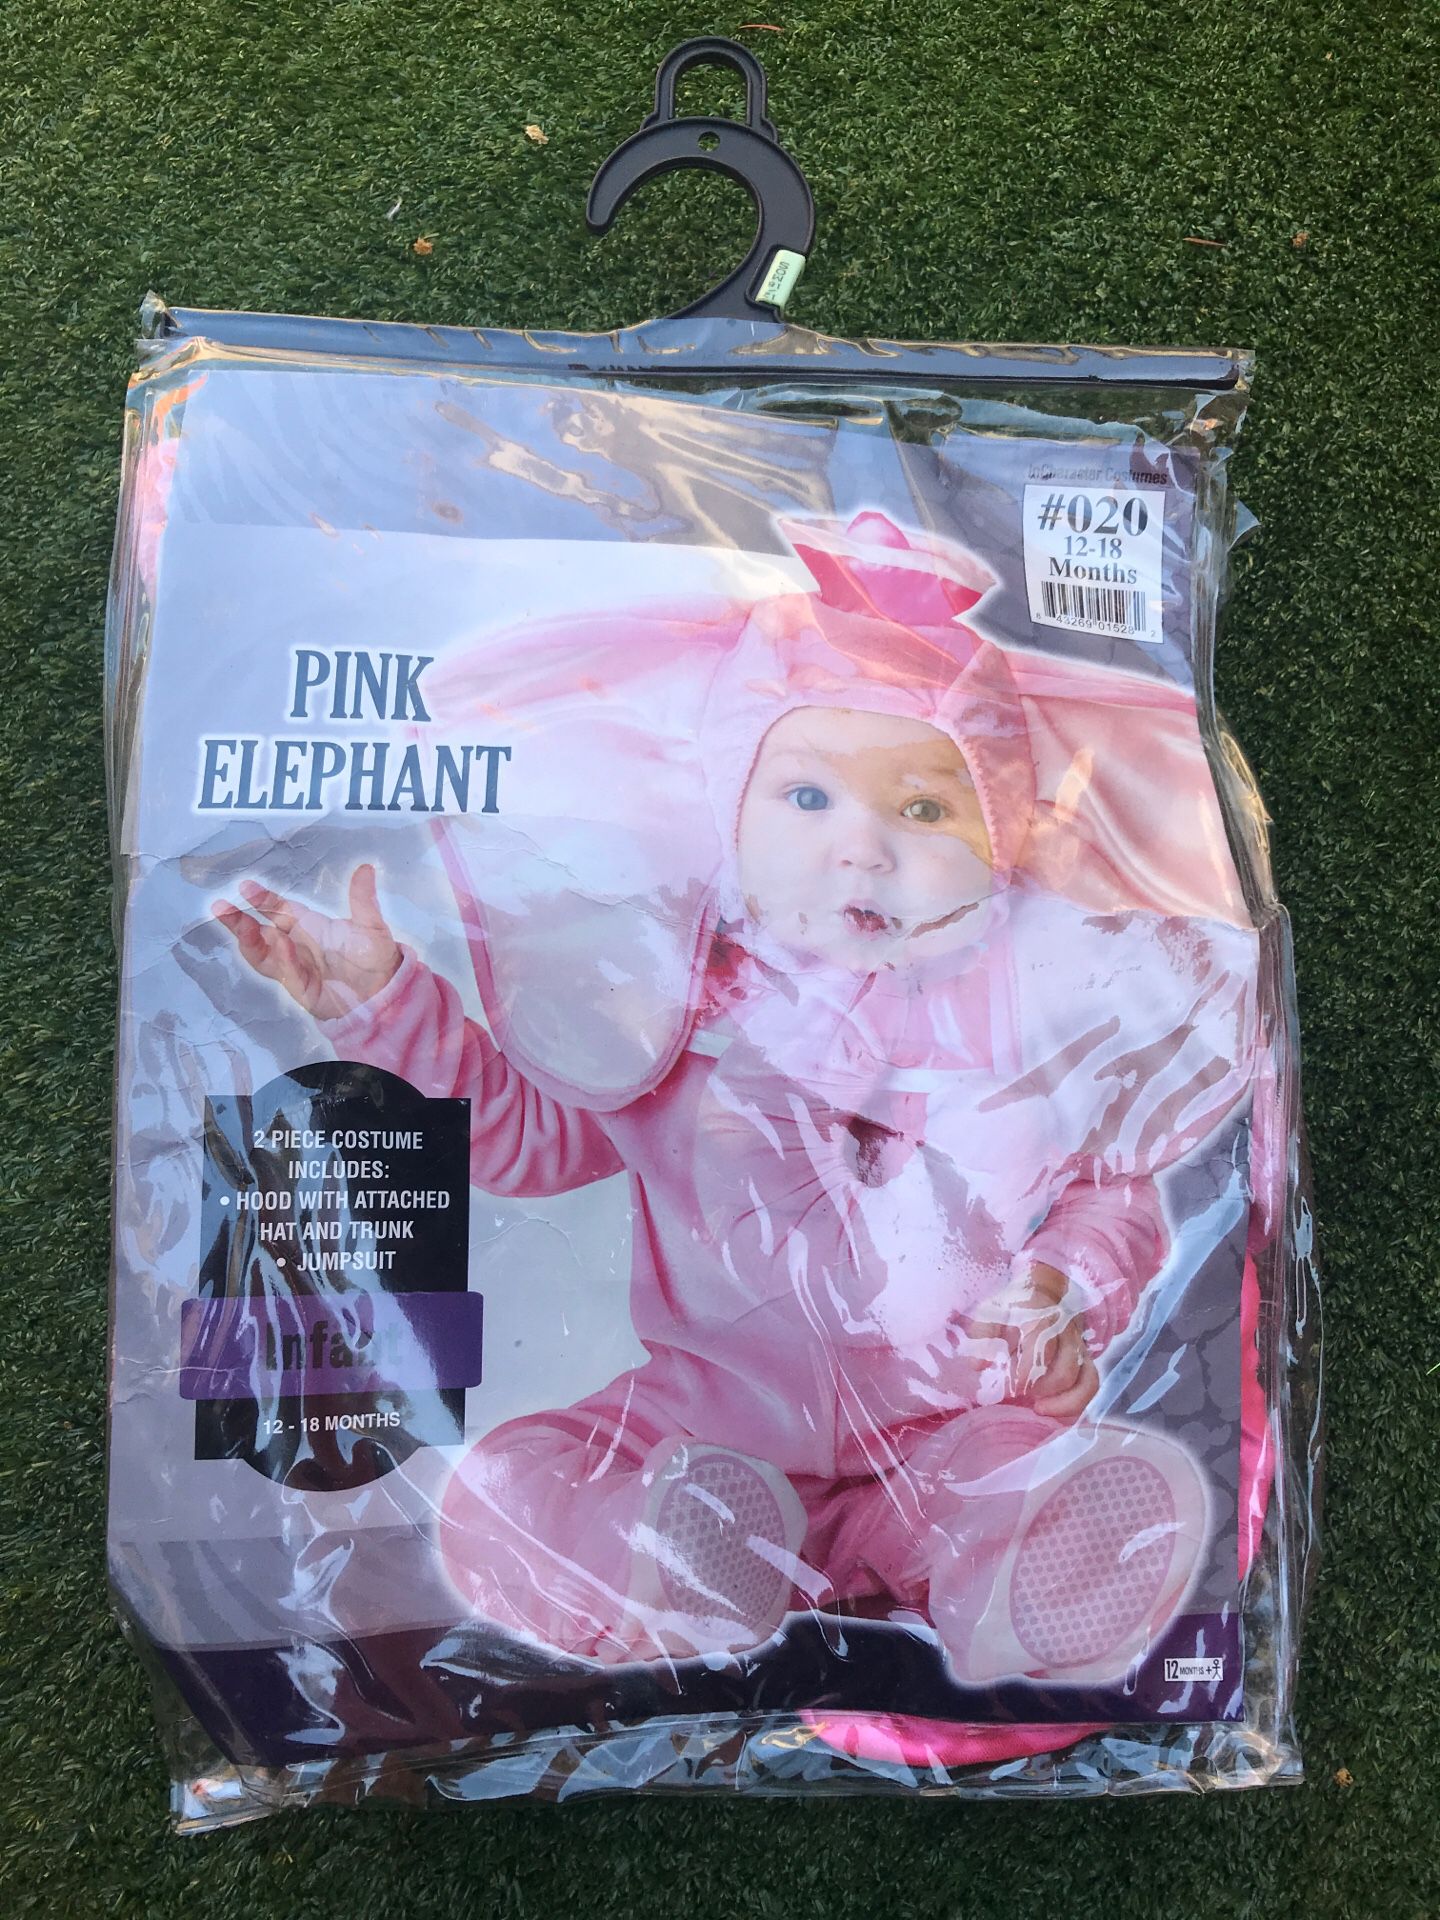 Pink elephant infant costume